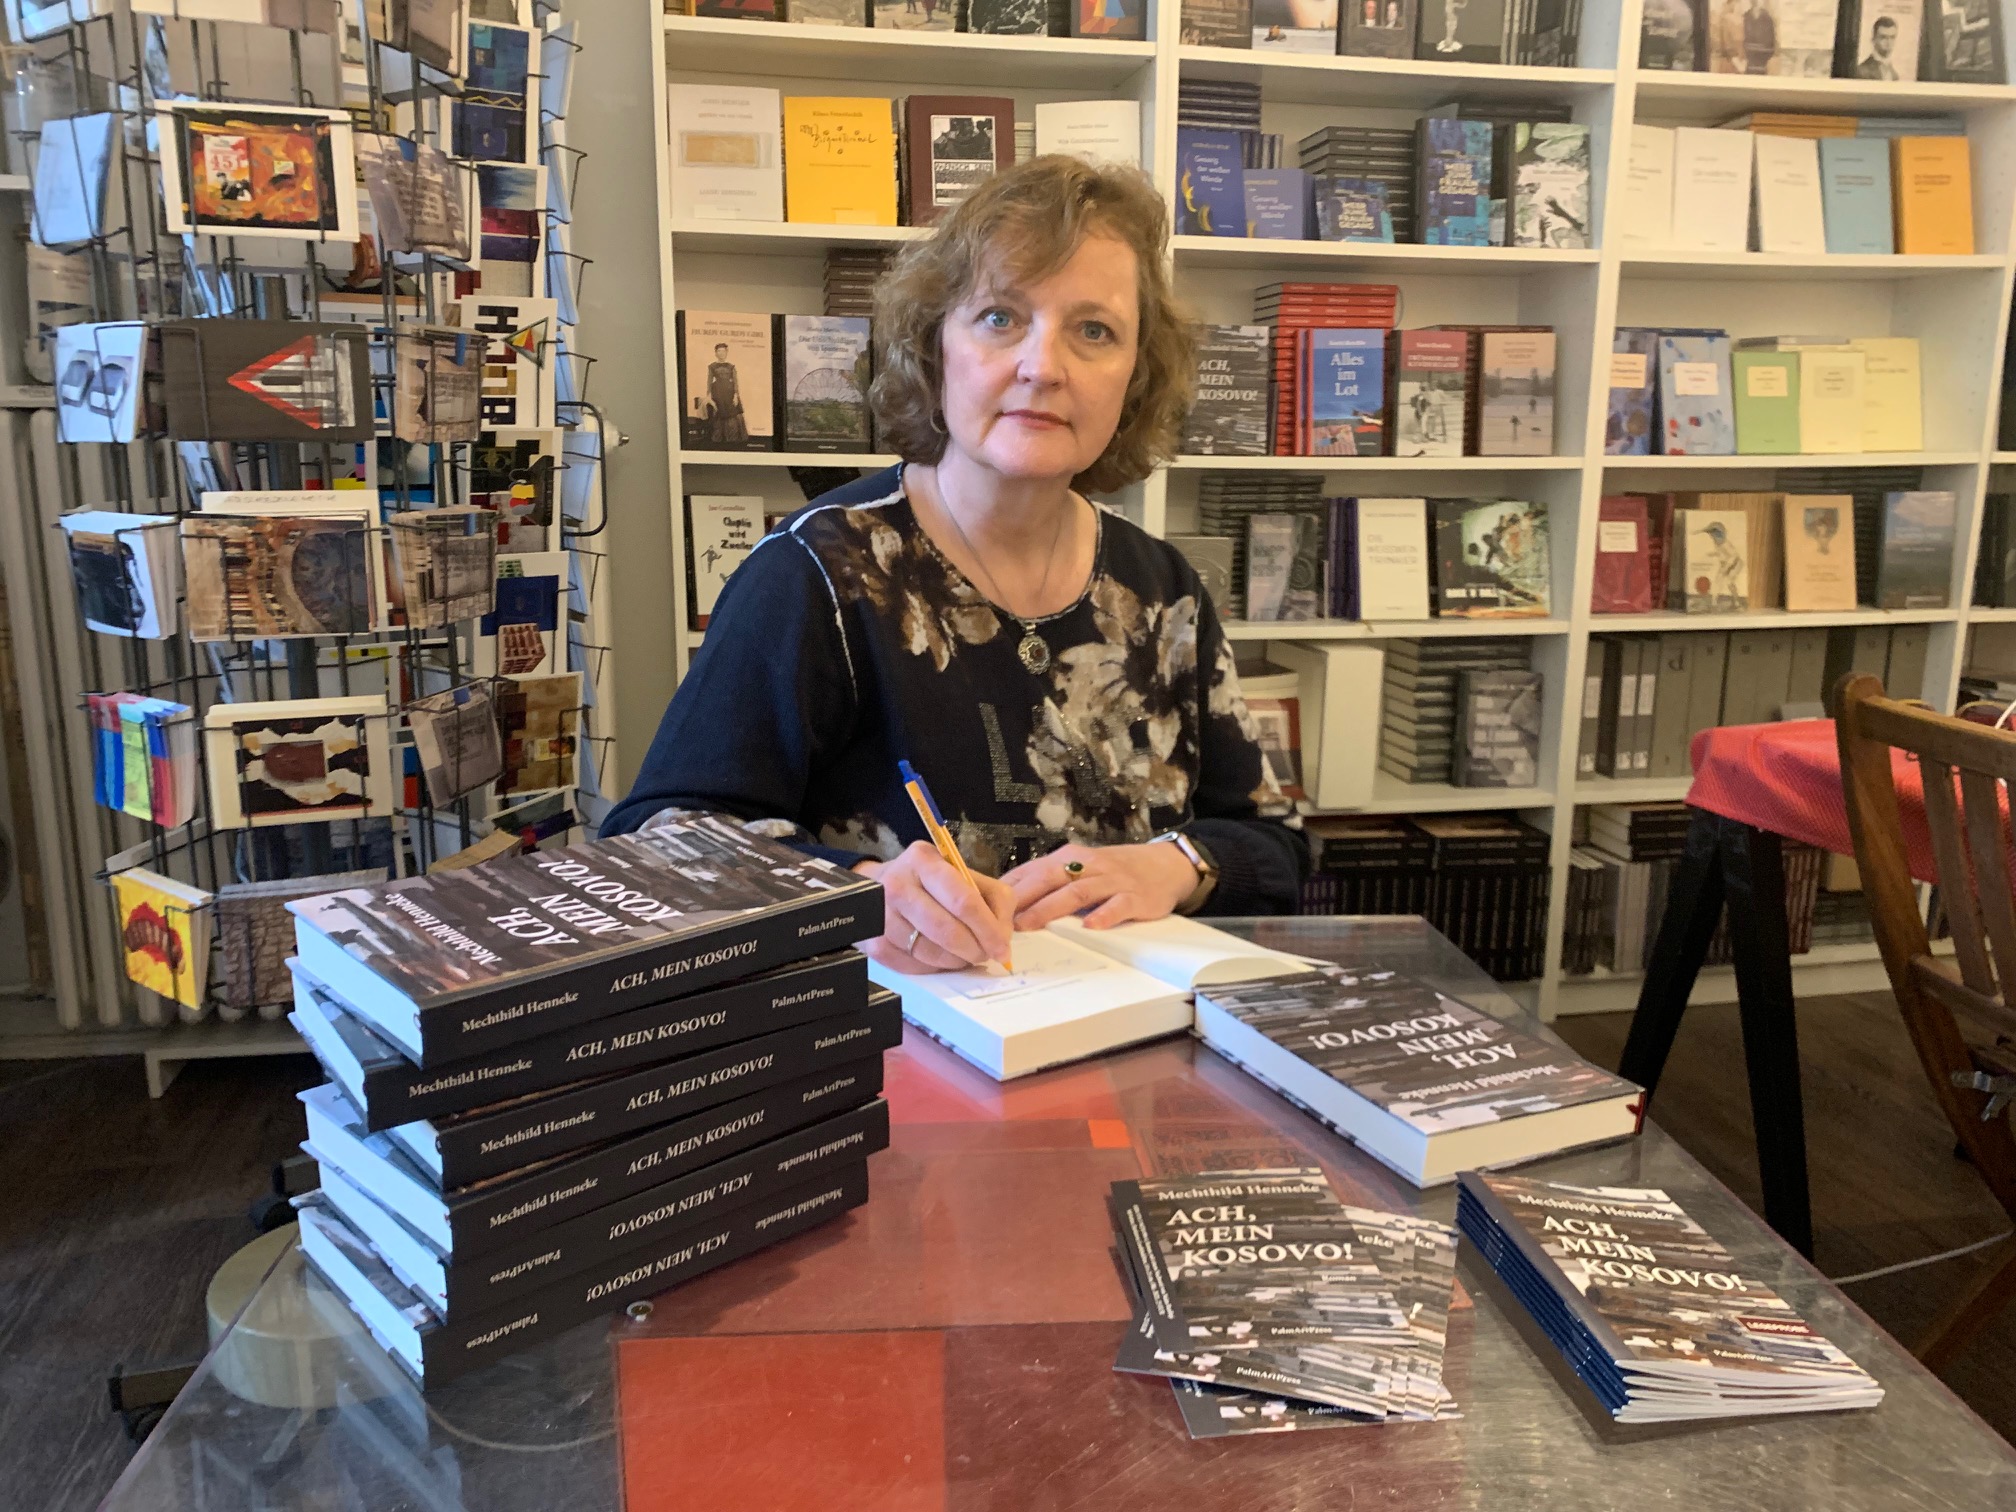 Promovohet në Cyrih romani “Ach, mein Kosovo!” i autores Mechthild Henneke